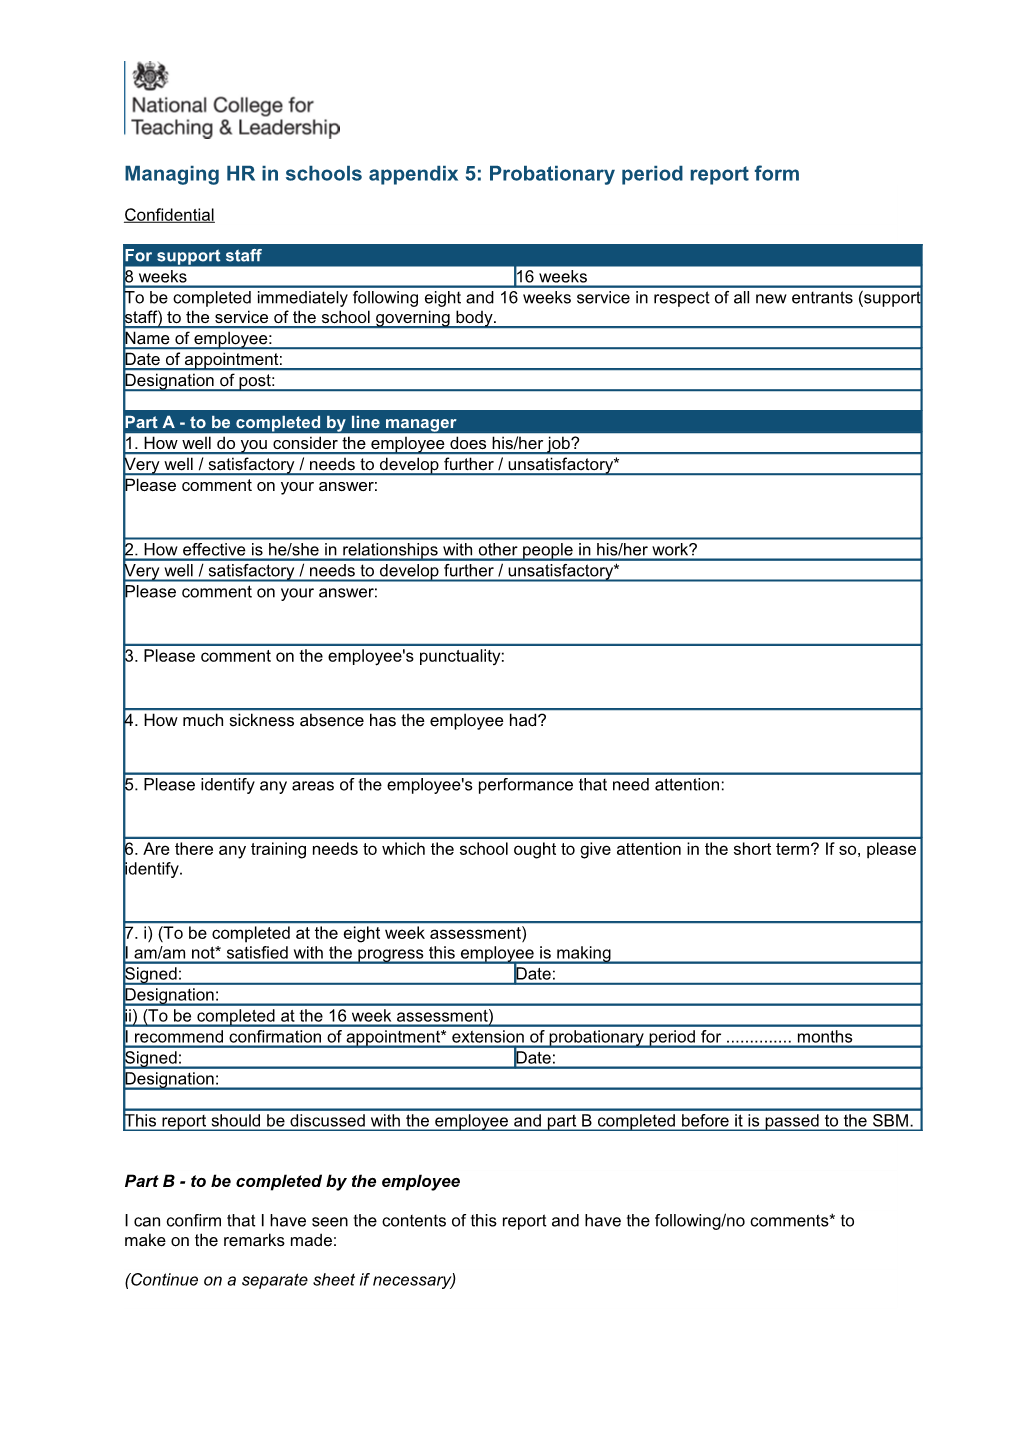 Managing HR in Schools Appendix 5: Probationary Period Report Form